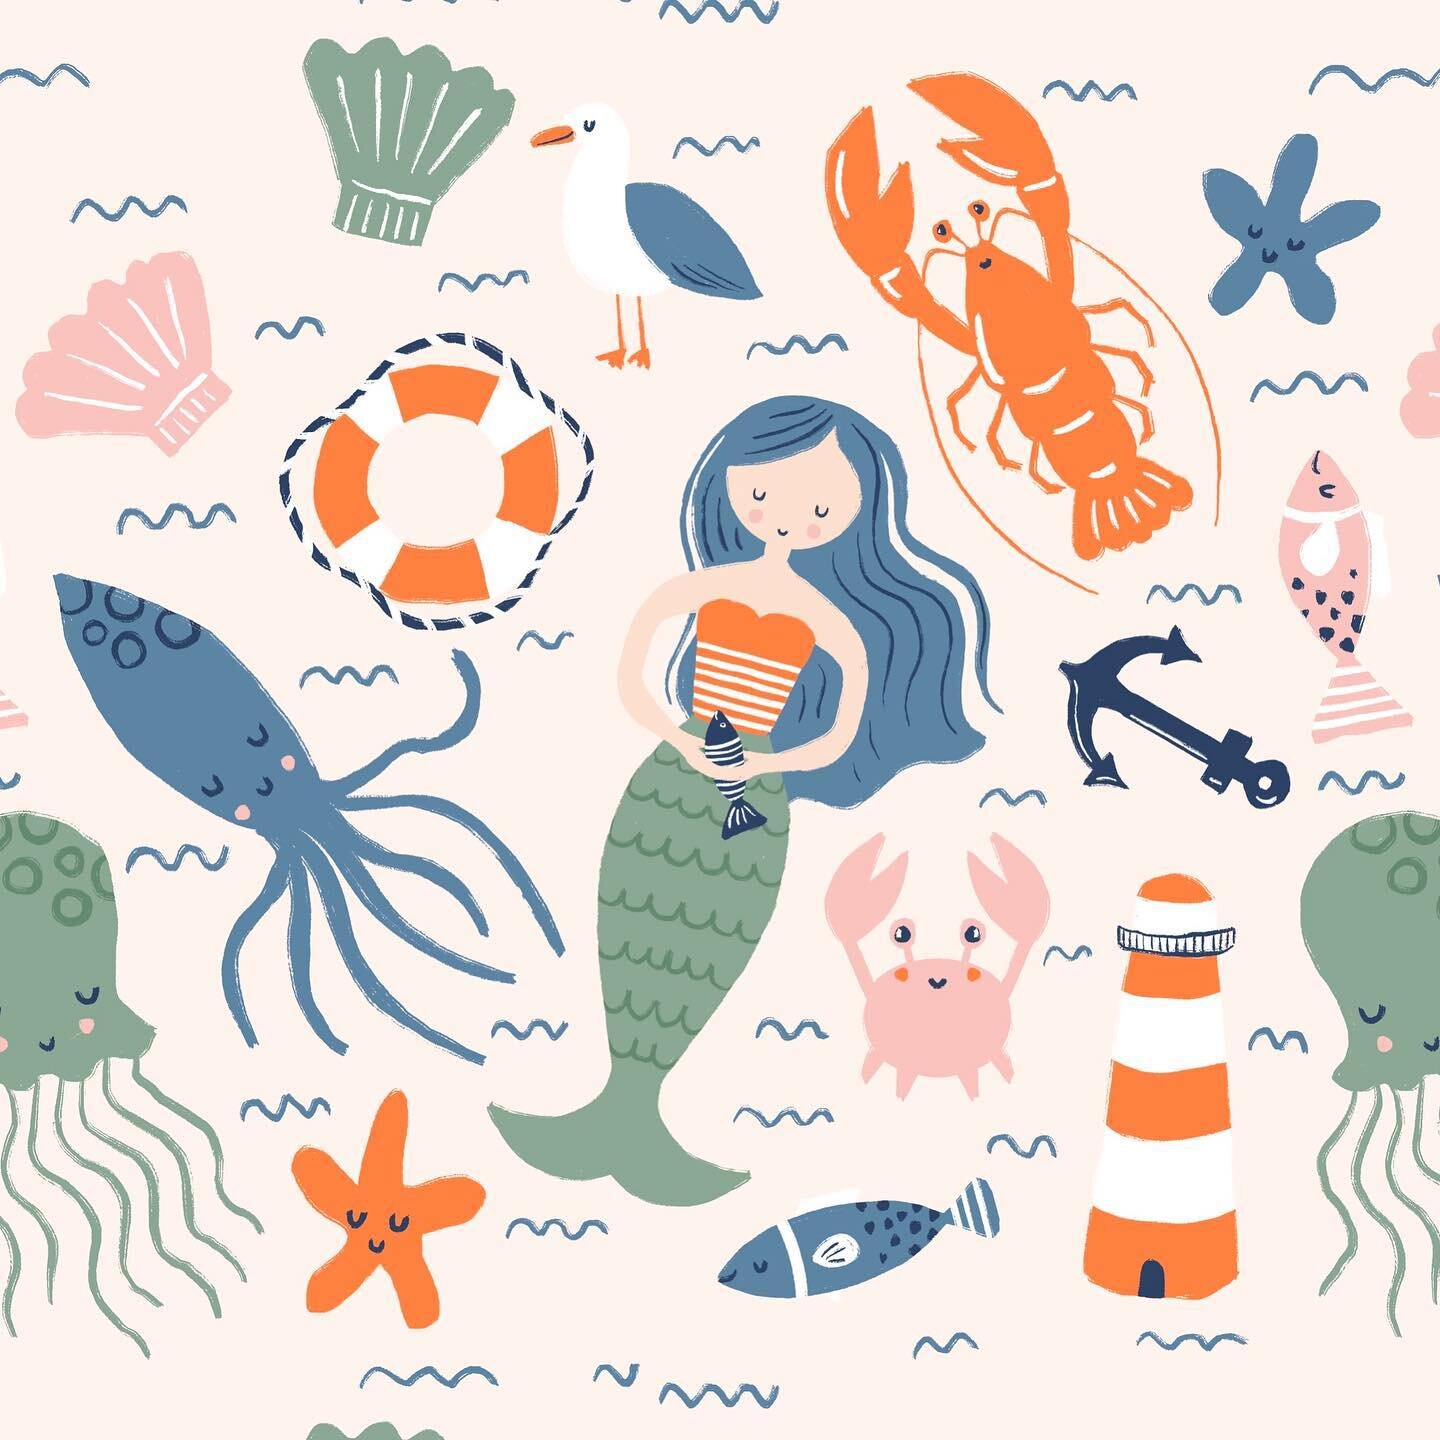 Happy Monday from this little mermaid I drew 🐠 
.
.
.
#surtex2023 #kidsart #fabricdesign #surfacedesign #surfacepatterndesign #patterndesign #printdesign #textiledesign #kidsfabric #patternillustration